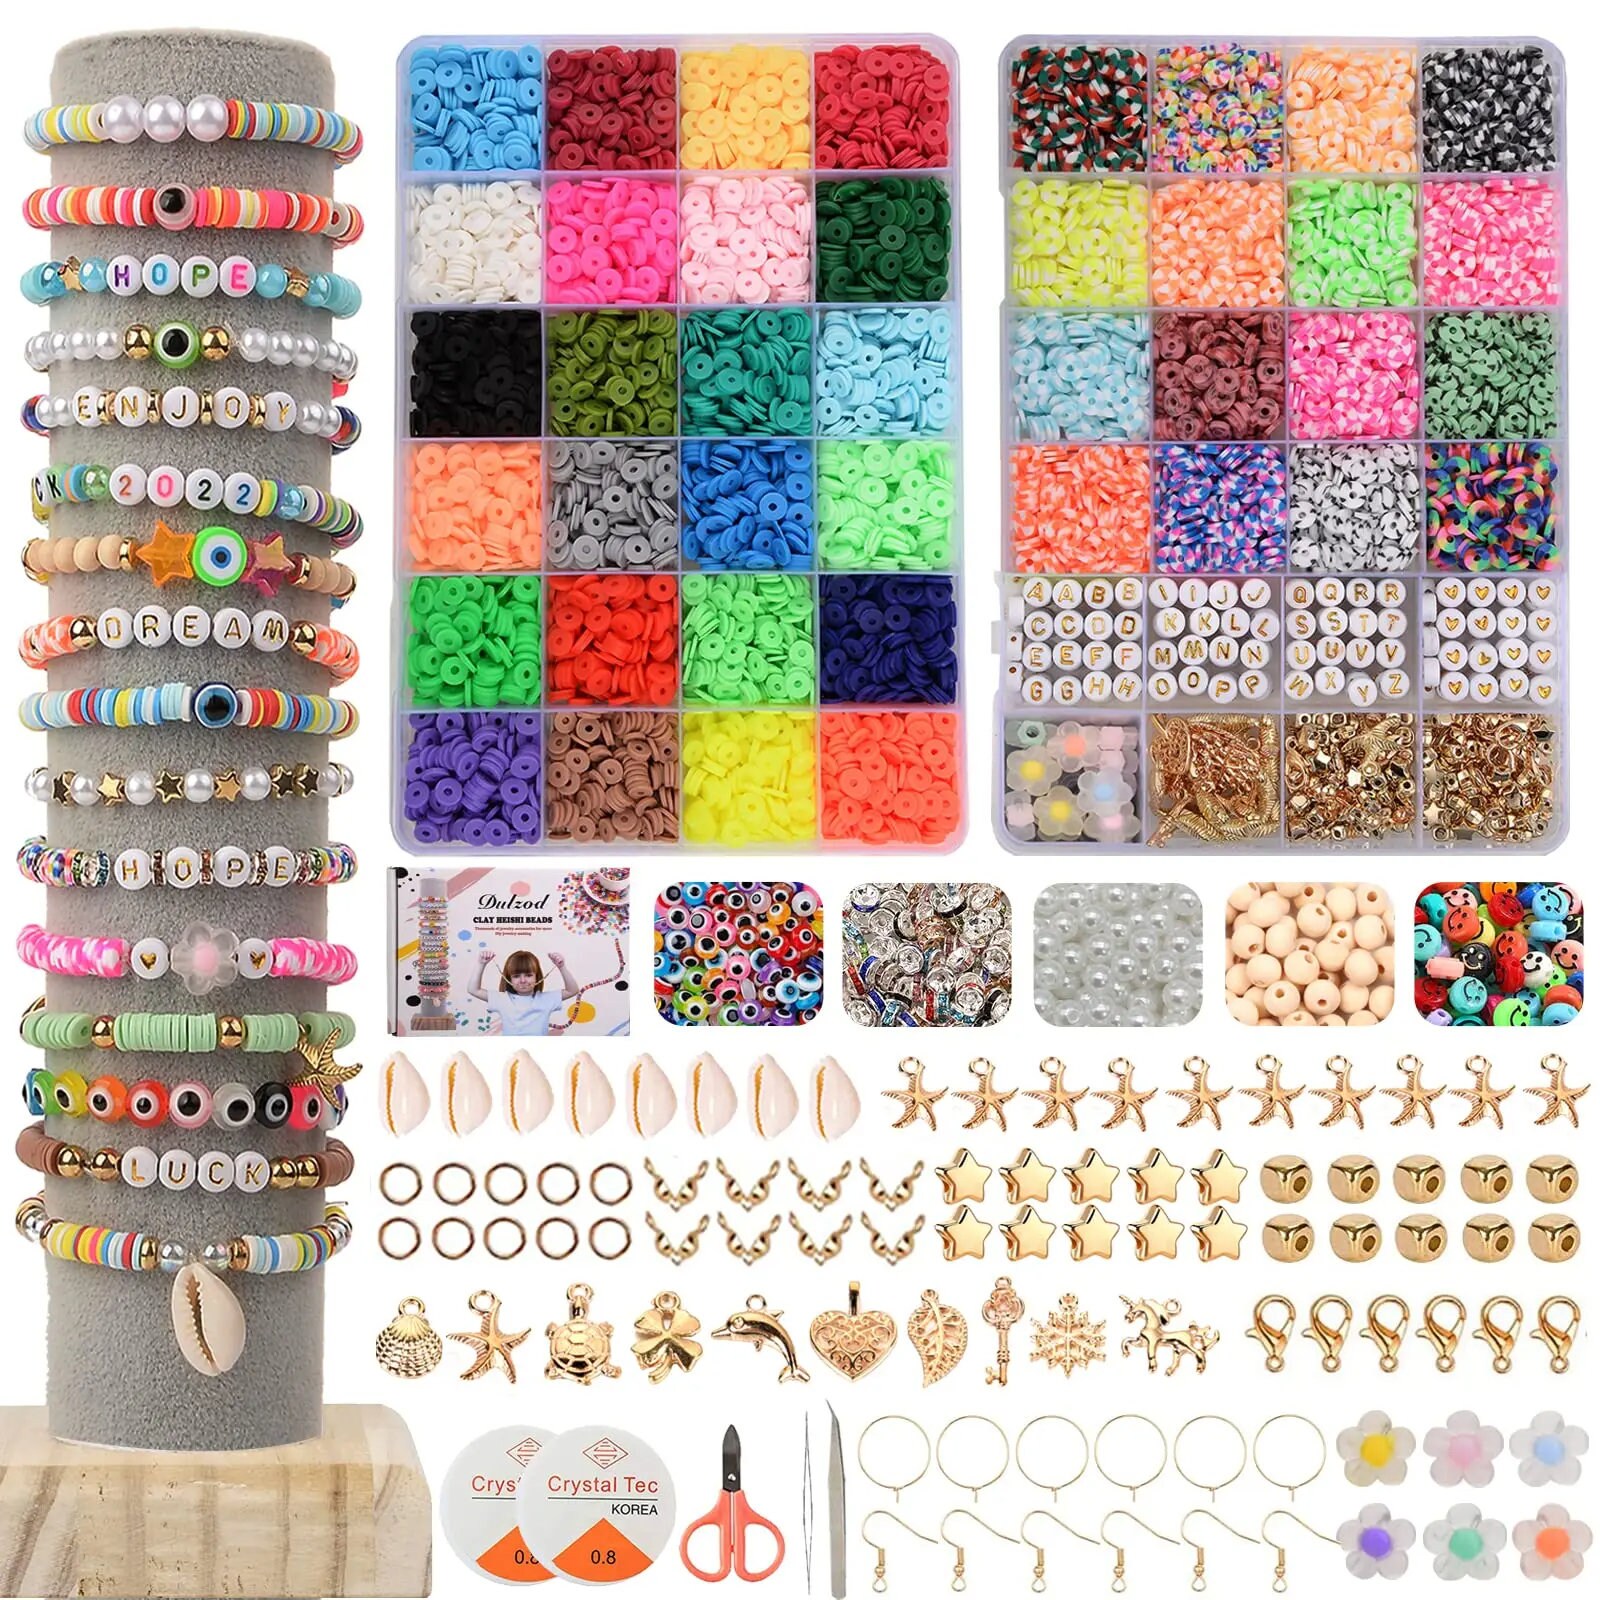 5000pcs White Clay Beads Polymer Clay Beads Heishi Beads Flat